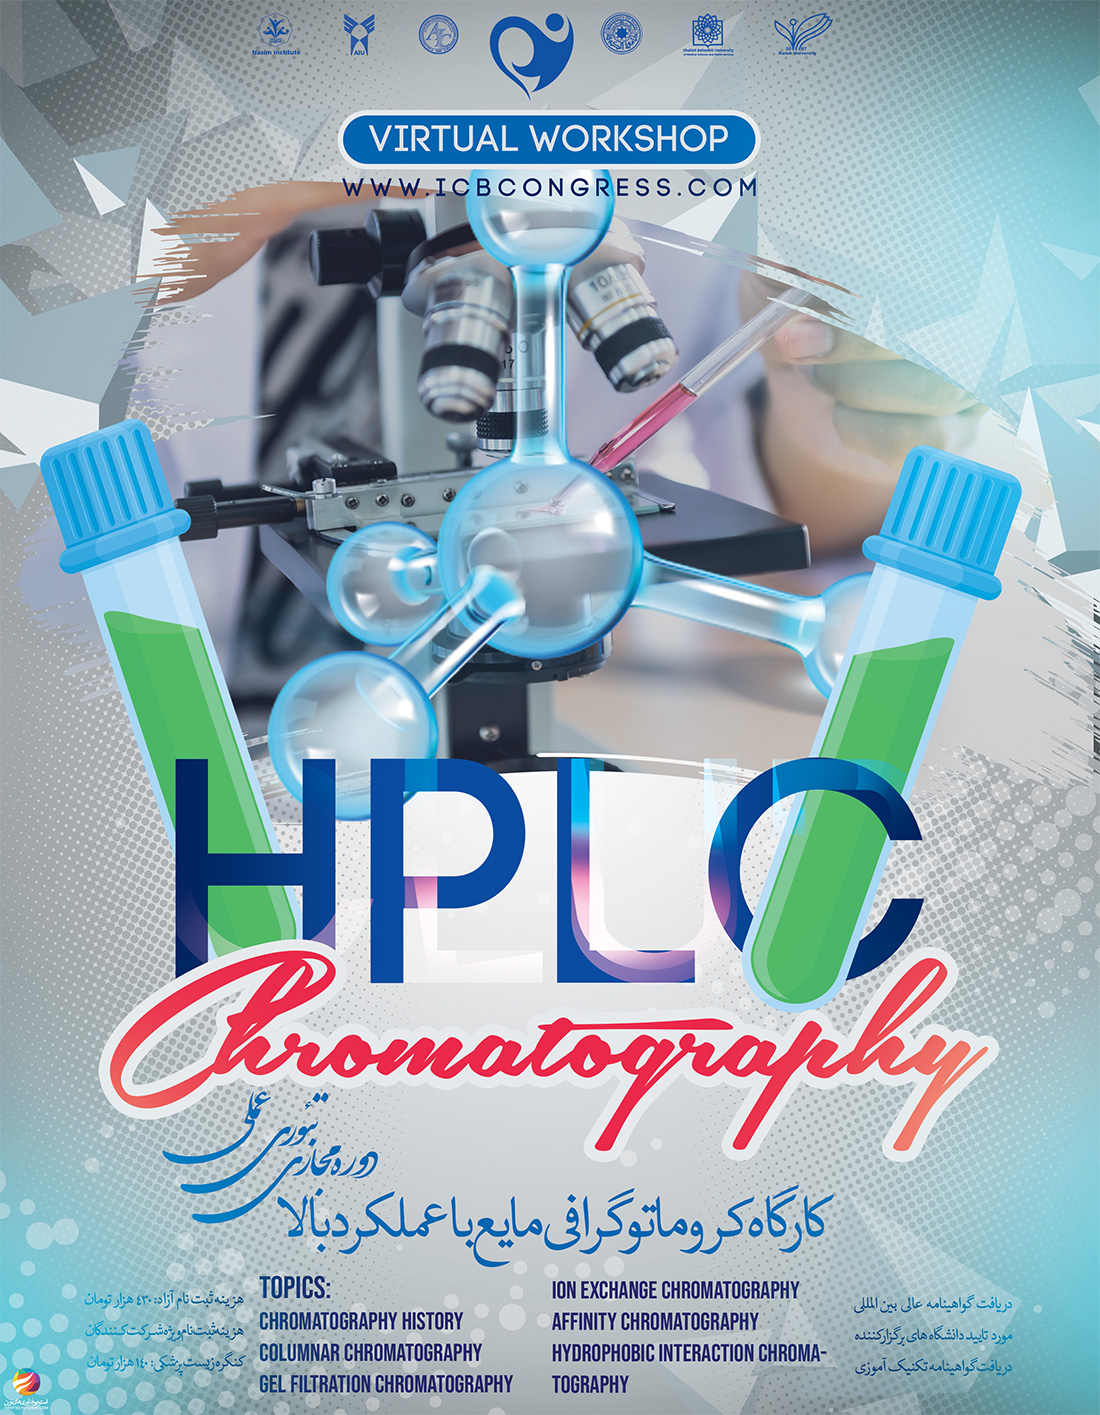 High Performance Liquid Chromatography Workshops